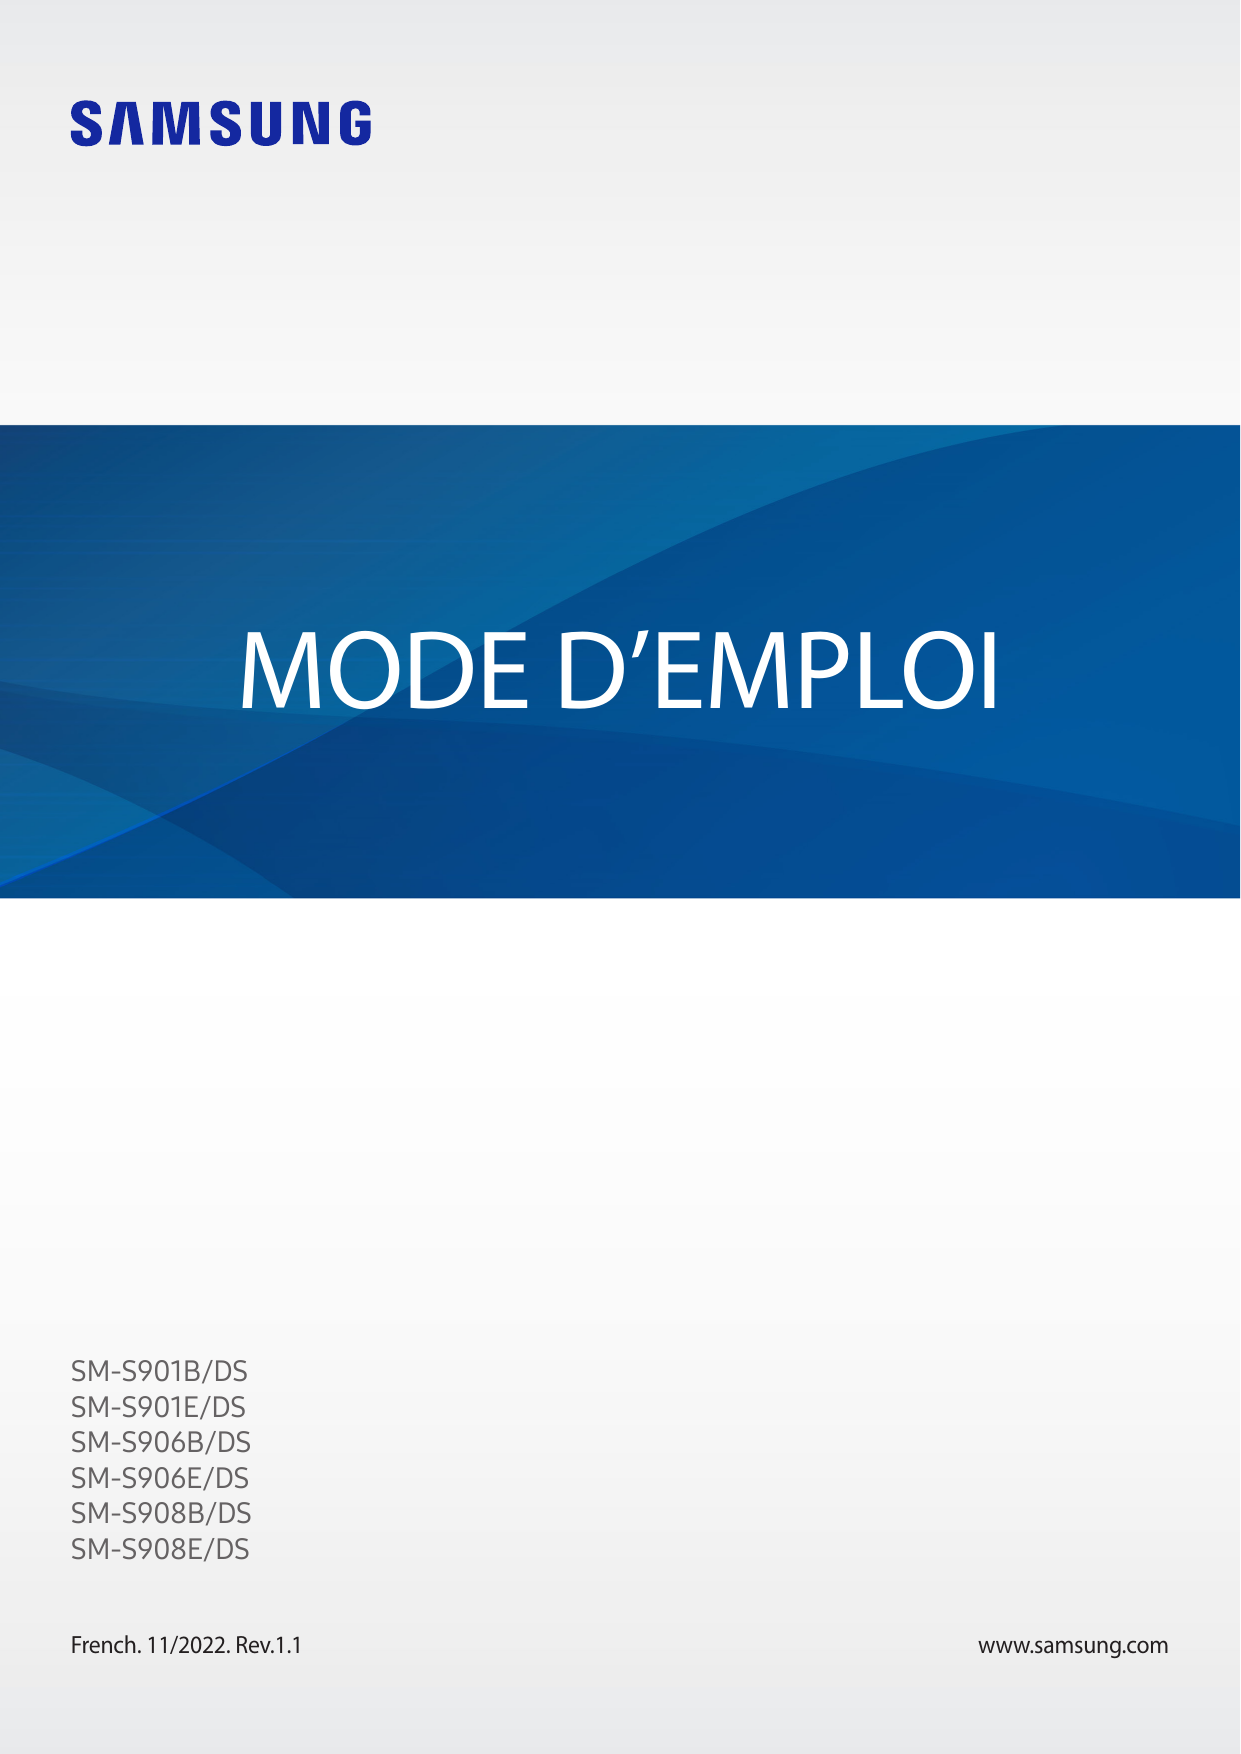 MODE D’EMPLOISM-S901B/DSSM-S901E/DSSM-S906B/DSSM-S906E/DSSM-S908B/DSSM-S908E/DSFrench. 11/2022. Rev.1.1www.samsung.com